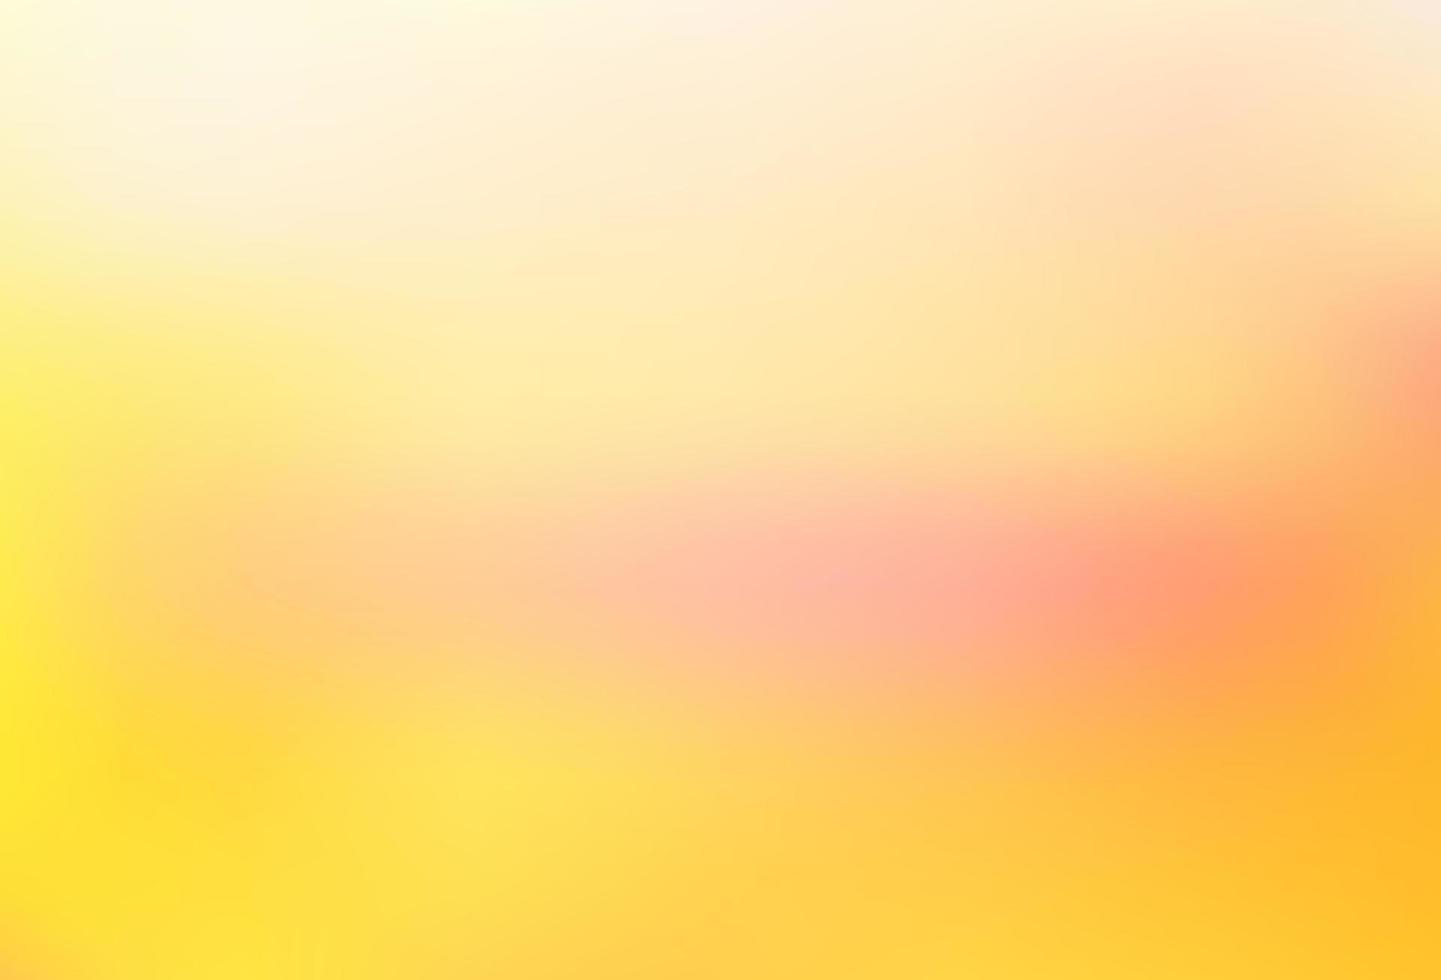 ljusgul, orange vektor suddig glans abstrakt mönster.